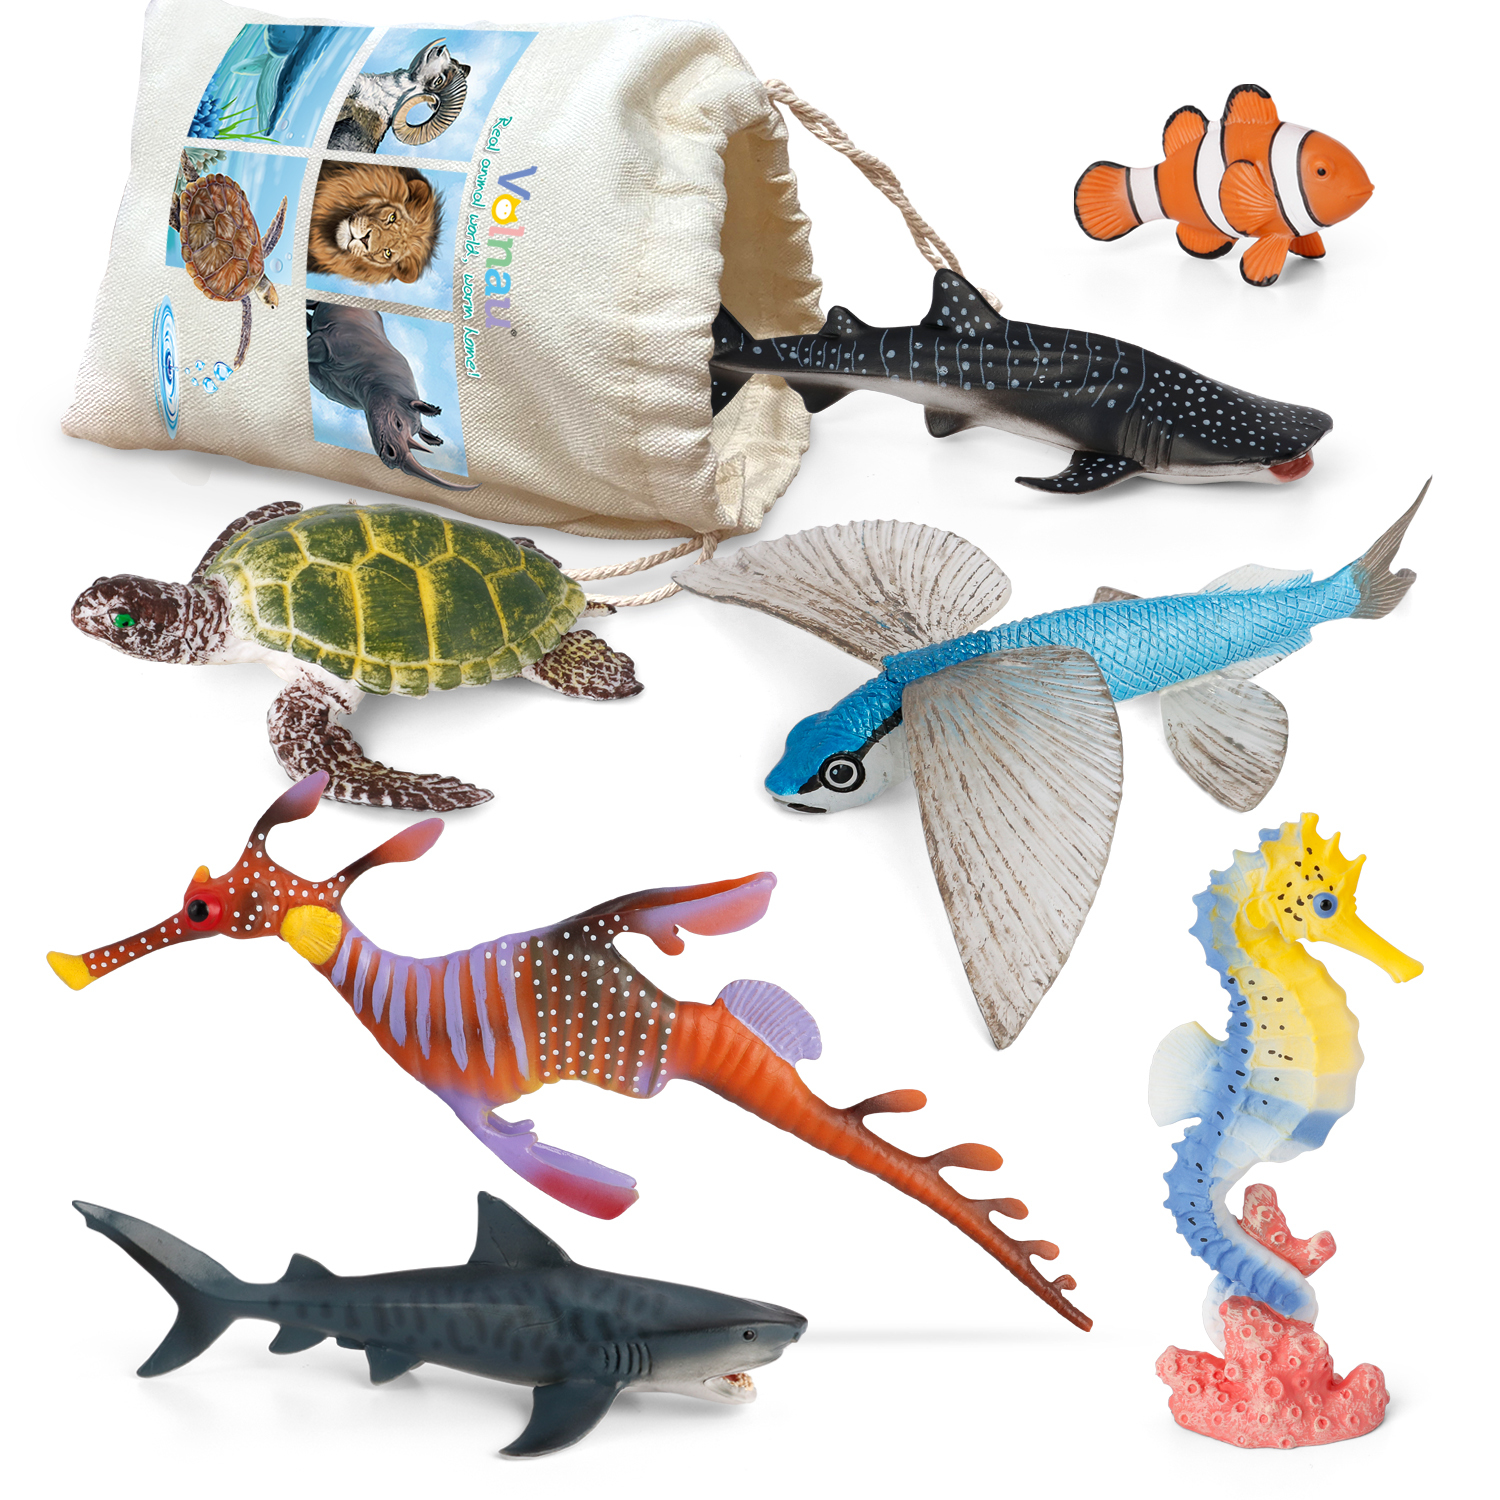 Mini Animal Tortoise Wild Animal Figurines Animal Toy Play Kids Party Gift 